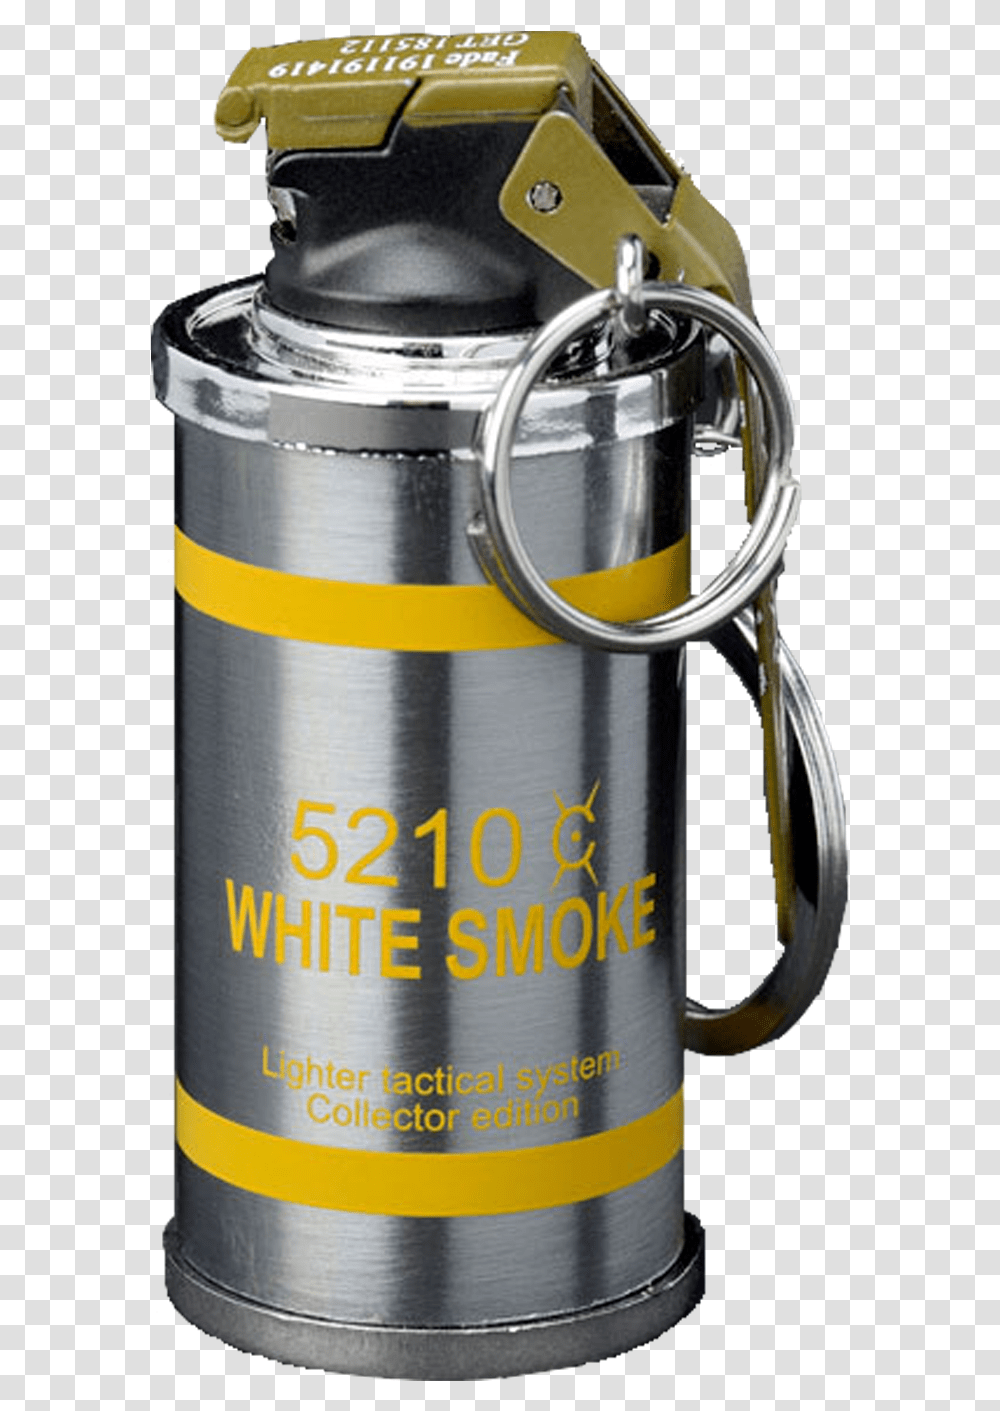 Hd Keychain Smoke Grenade Lighter Smoke Grenade, Barrel, Keg, Wristwatch, Coffee Cup Transparent Png